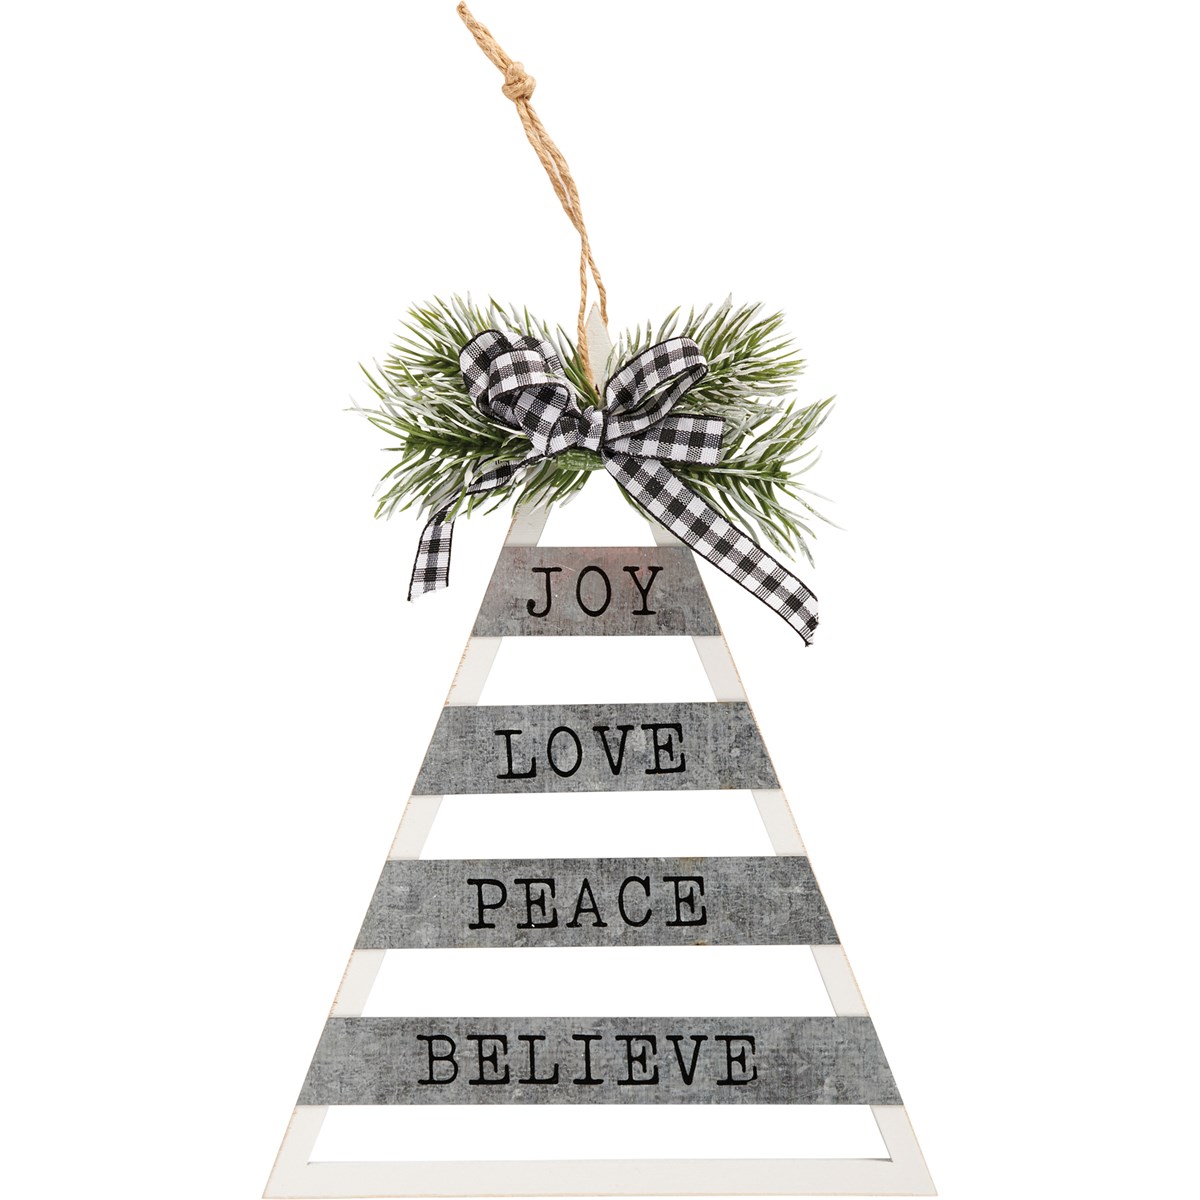 Joy Love Peace Believe Hanging Decor - Wood, Plastic, Cotton, Jute